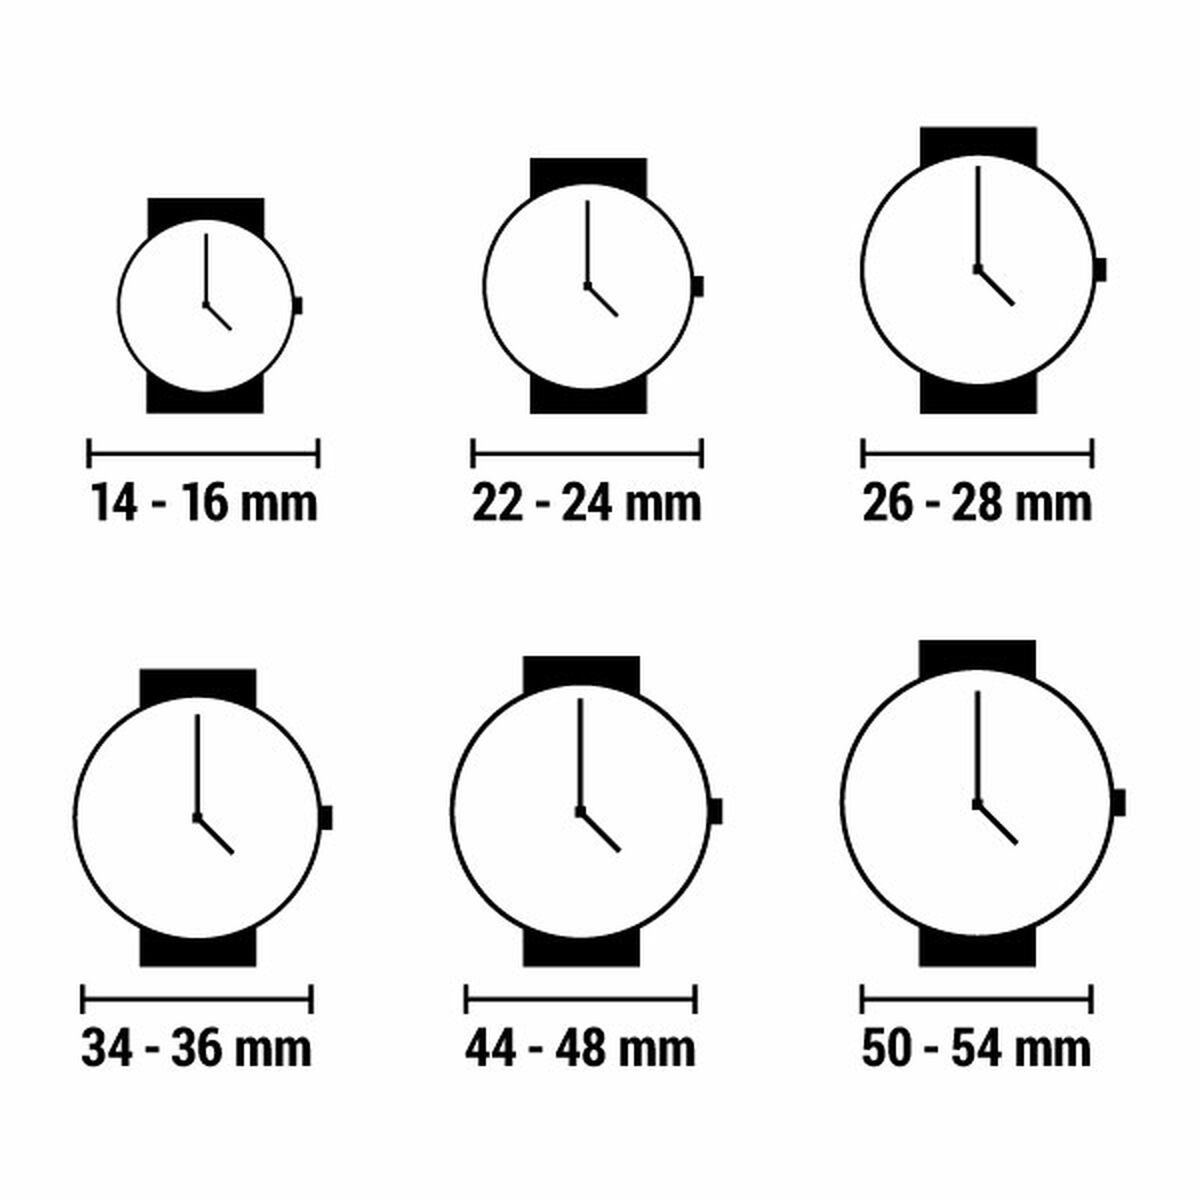 Horloge Dames Calvin Klein 25200393